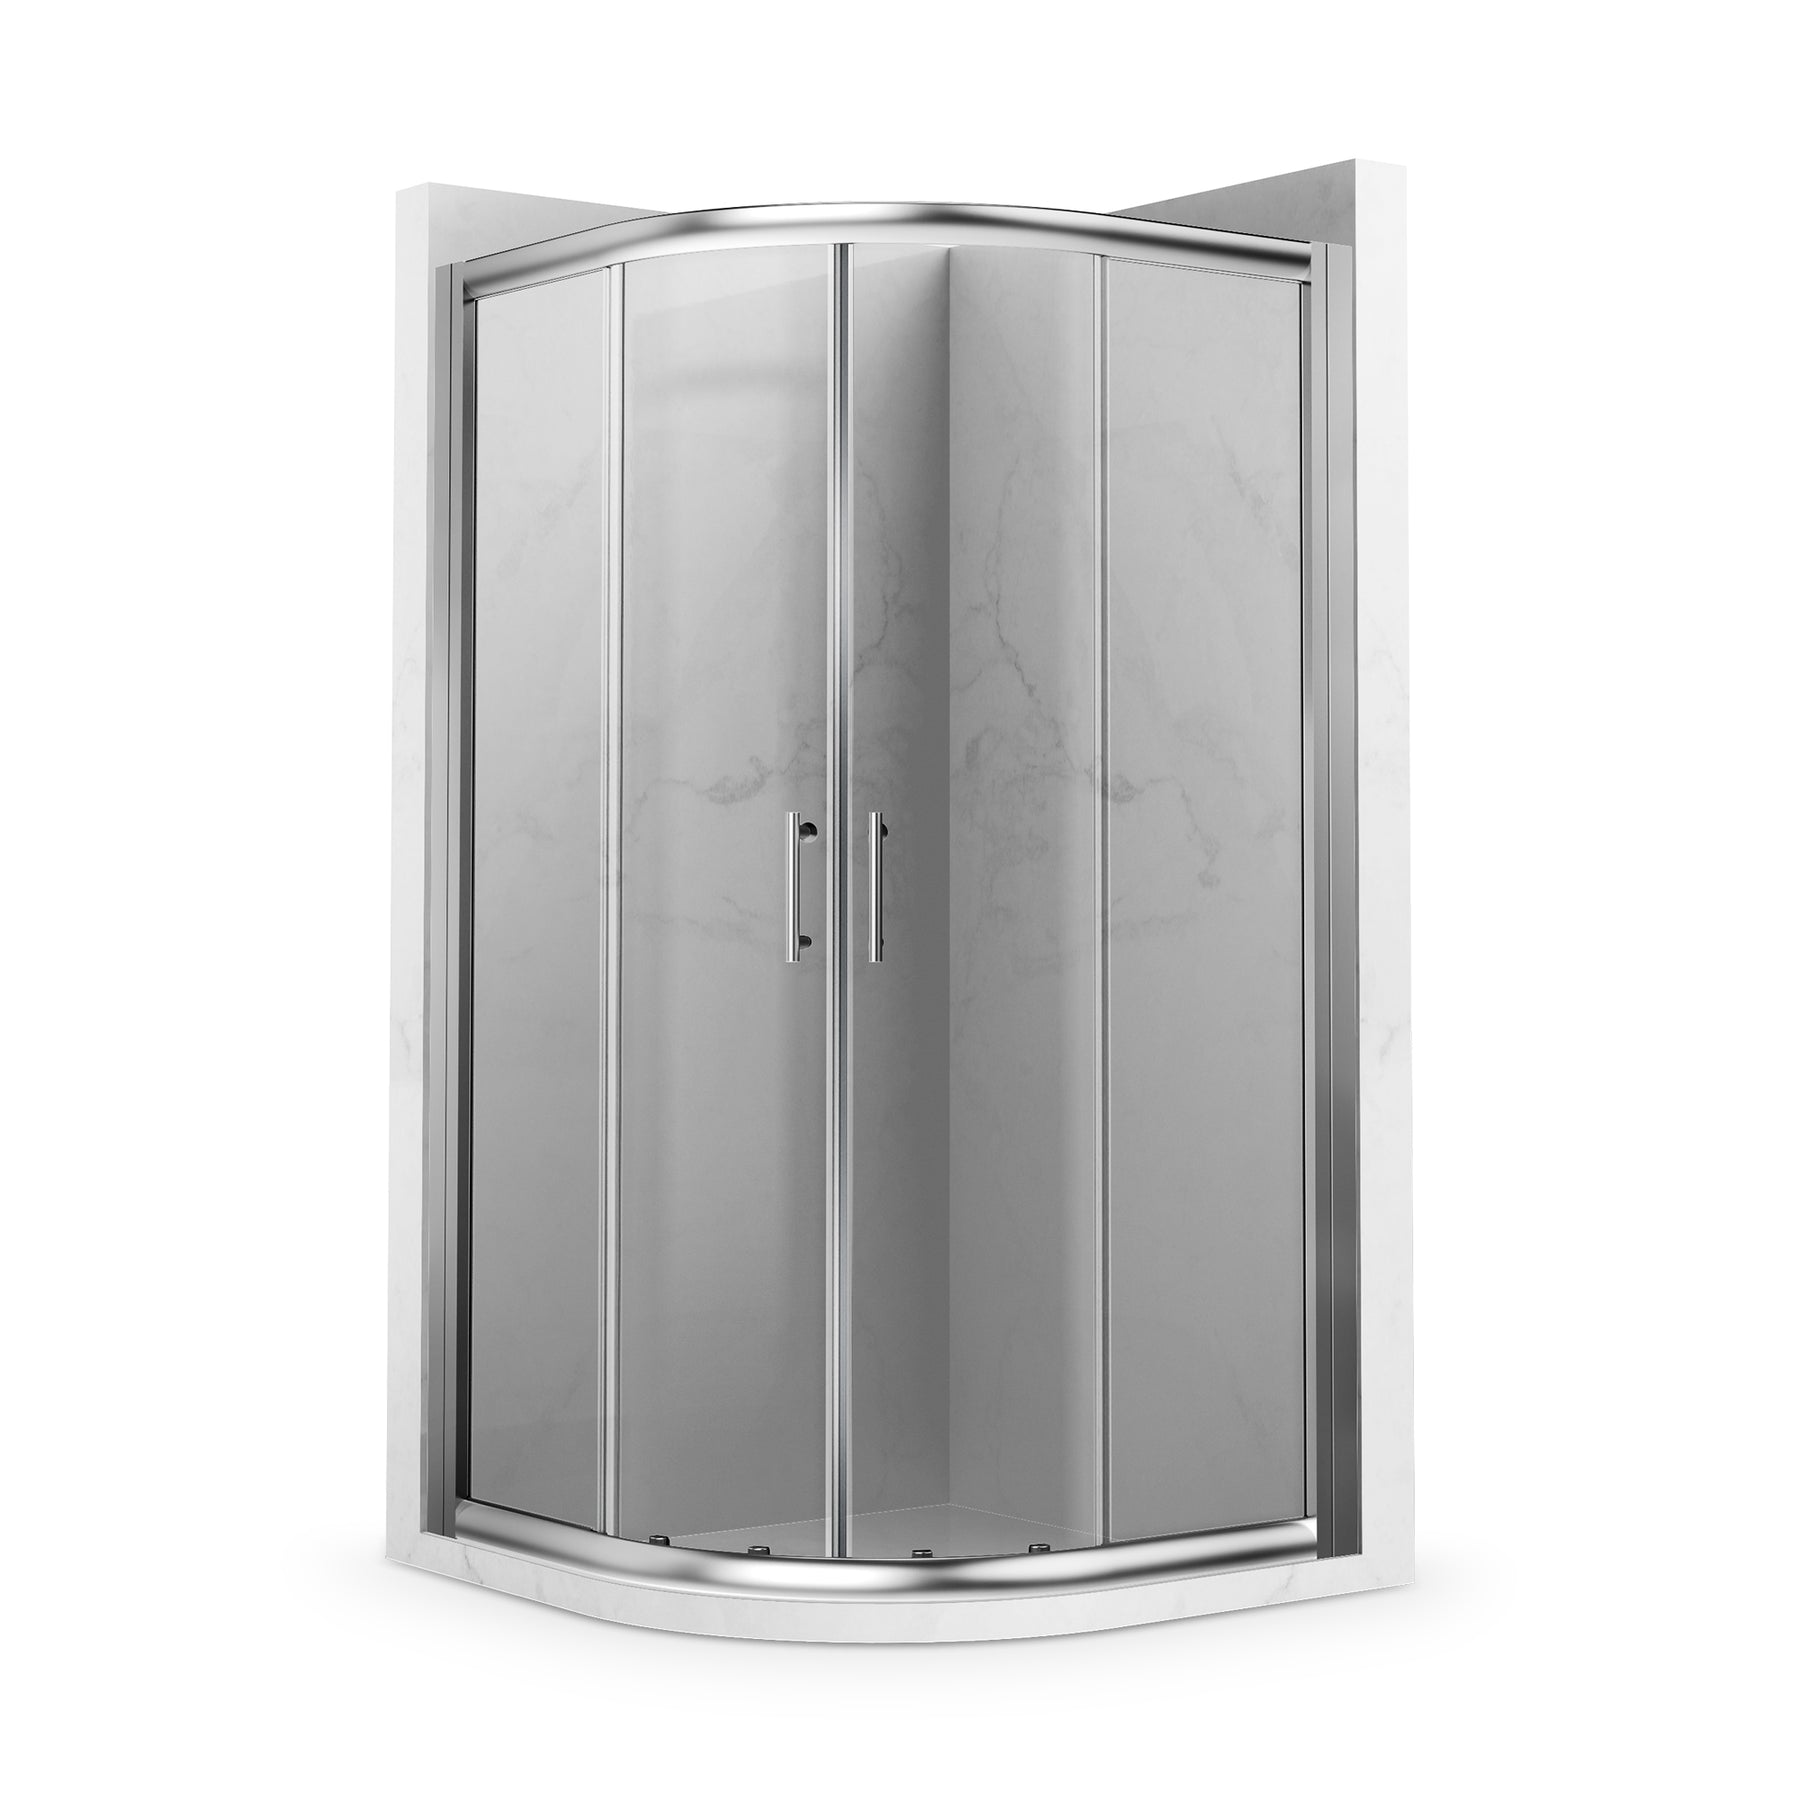 SL4U Round Corner Frameless Shower Enclosure, Double Sliding Shower Door, 38"D x 38"W x 72"H